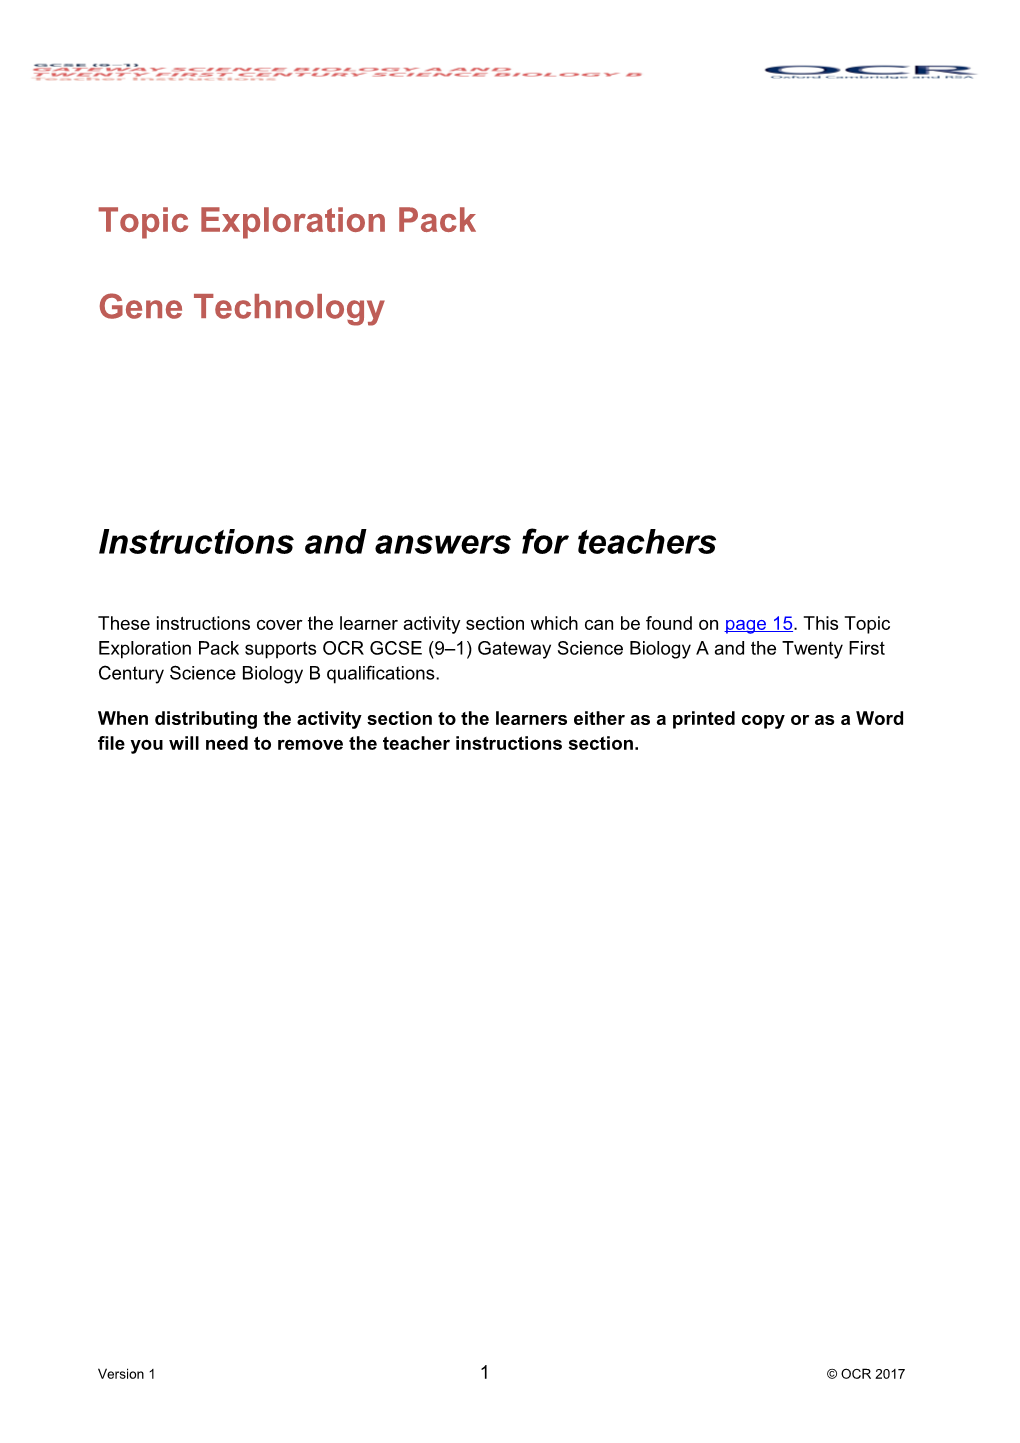 OCR GCSE (9-1) Science Biology Topic Exploration Pack - Gene Technology